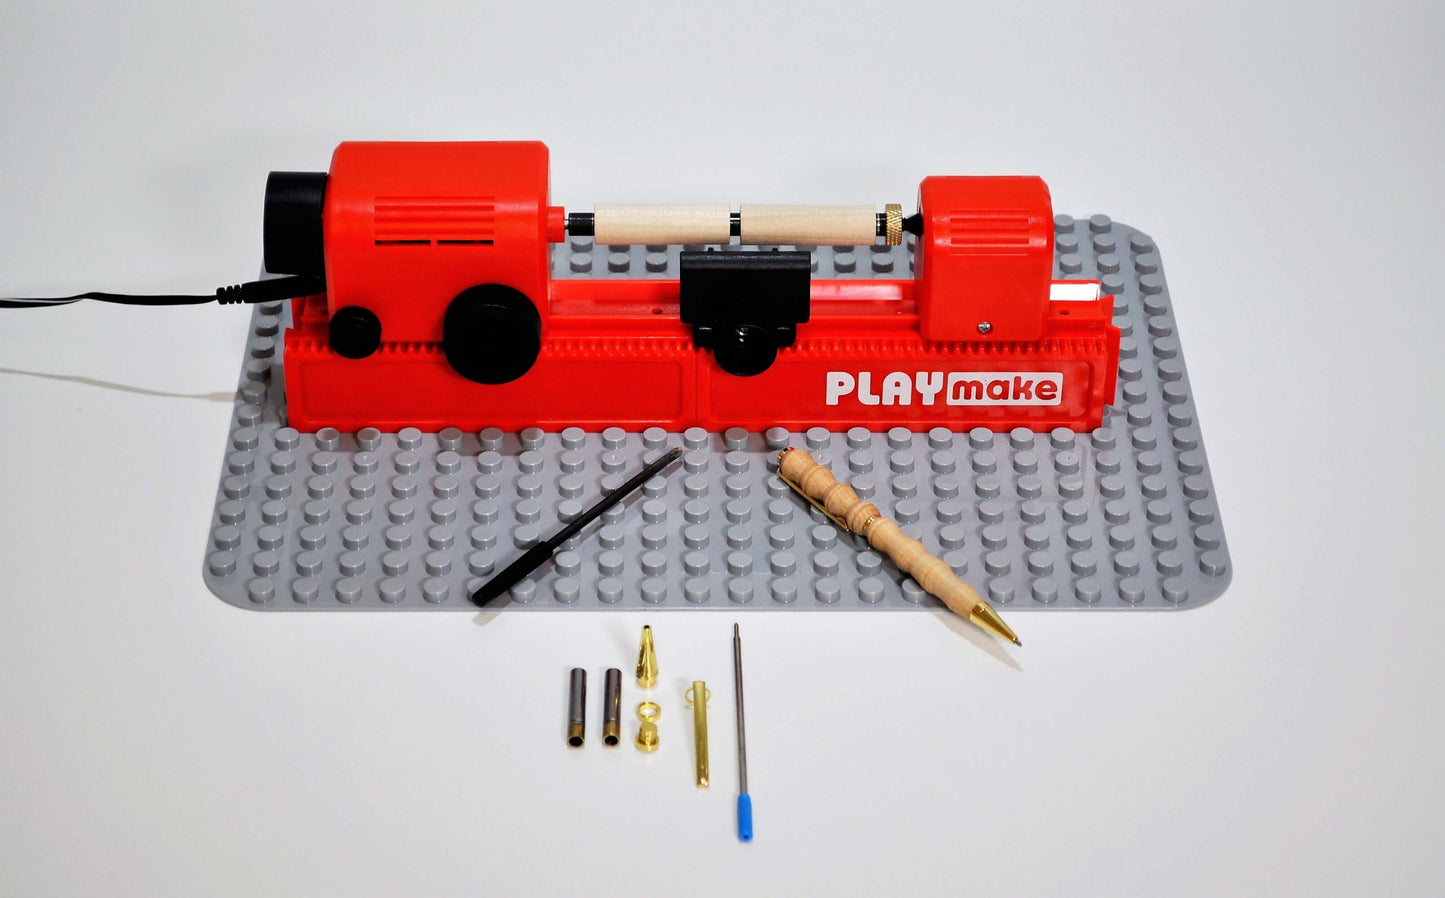 PLAYmake penmaker starter set